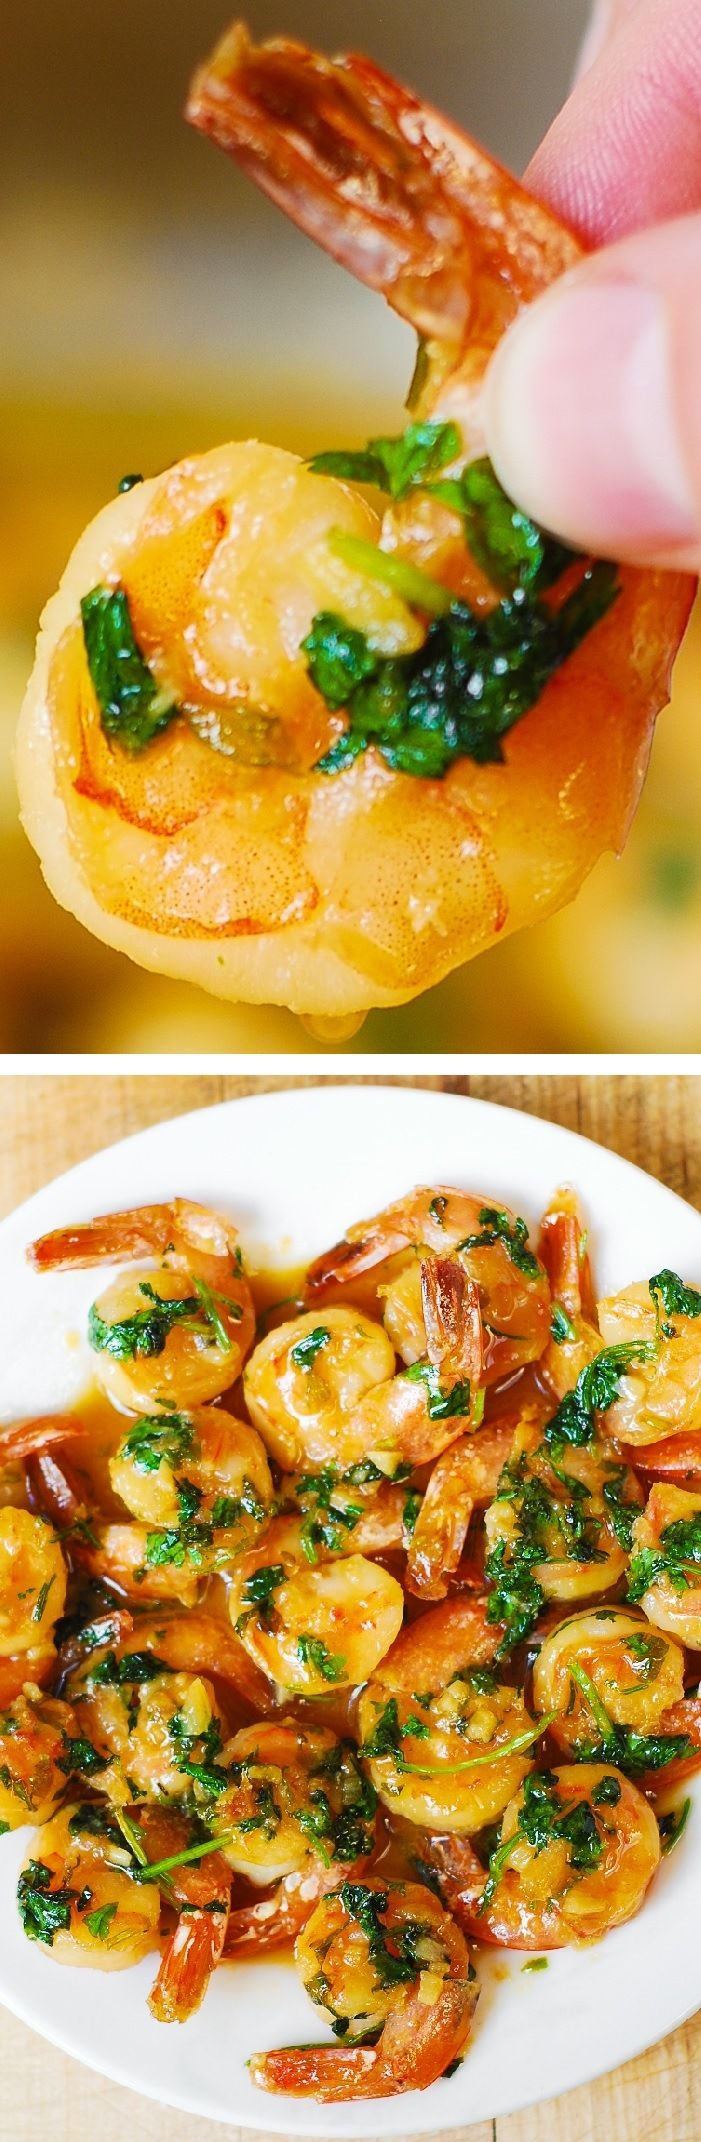 Easy Low Cholesterol Recipes For Dinner
 Cilantro Lime Honey Garlic Shrimp easy healthy gluten